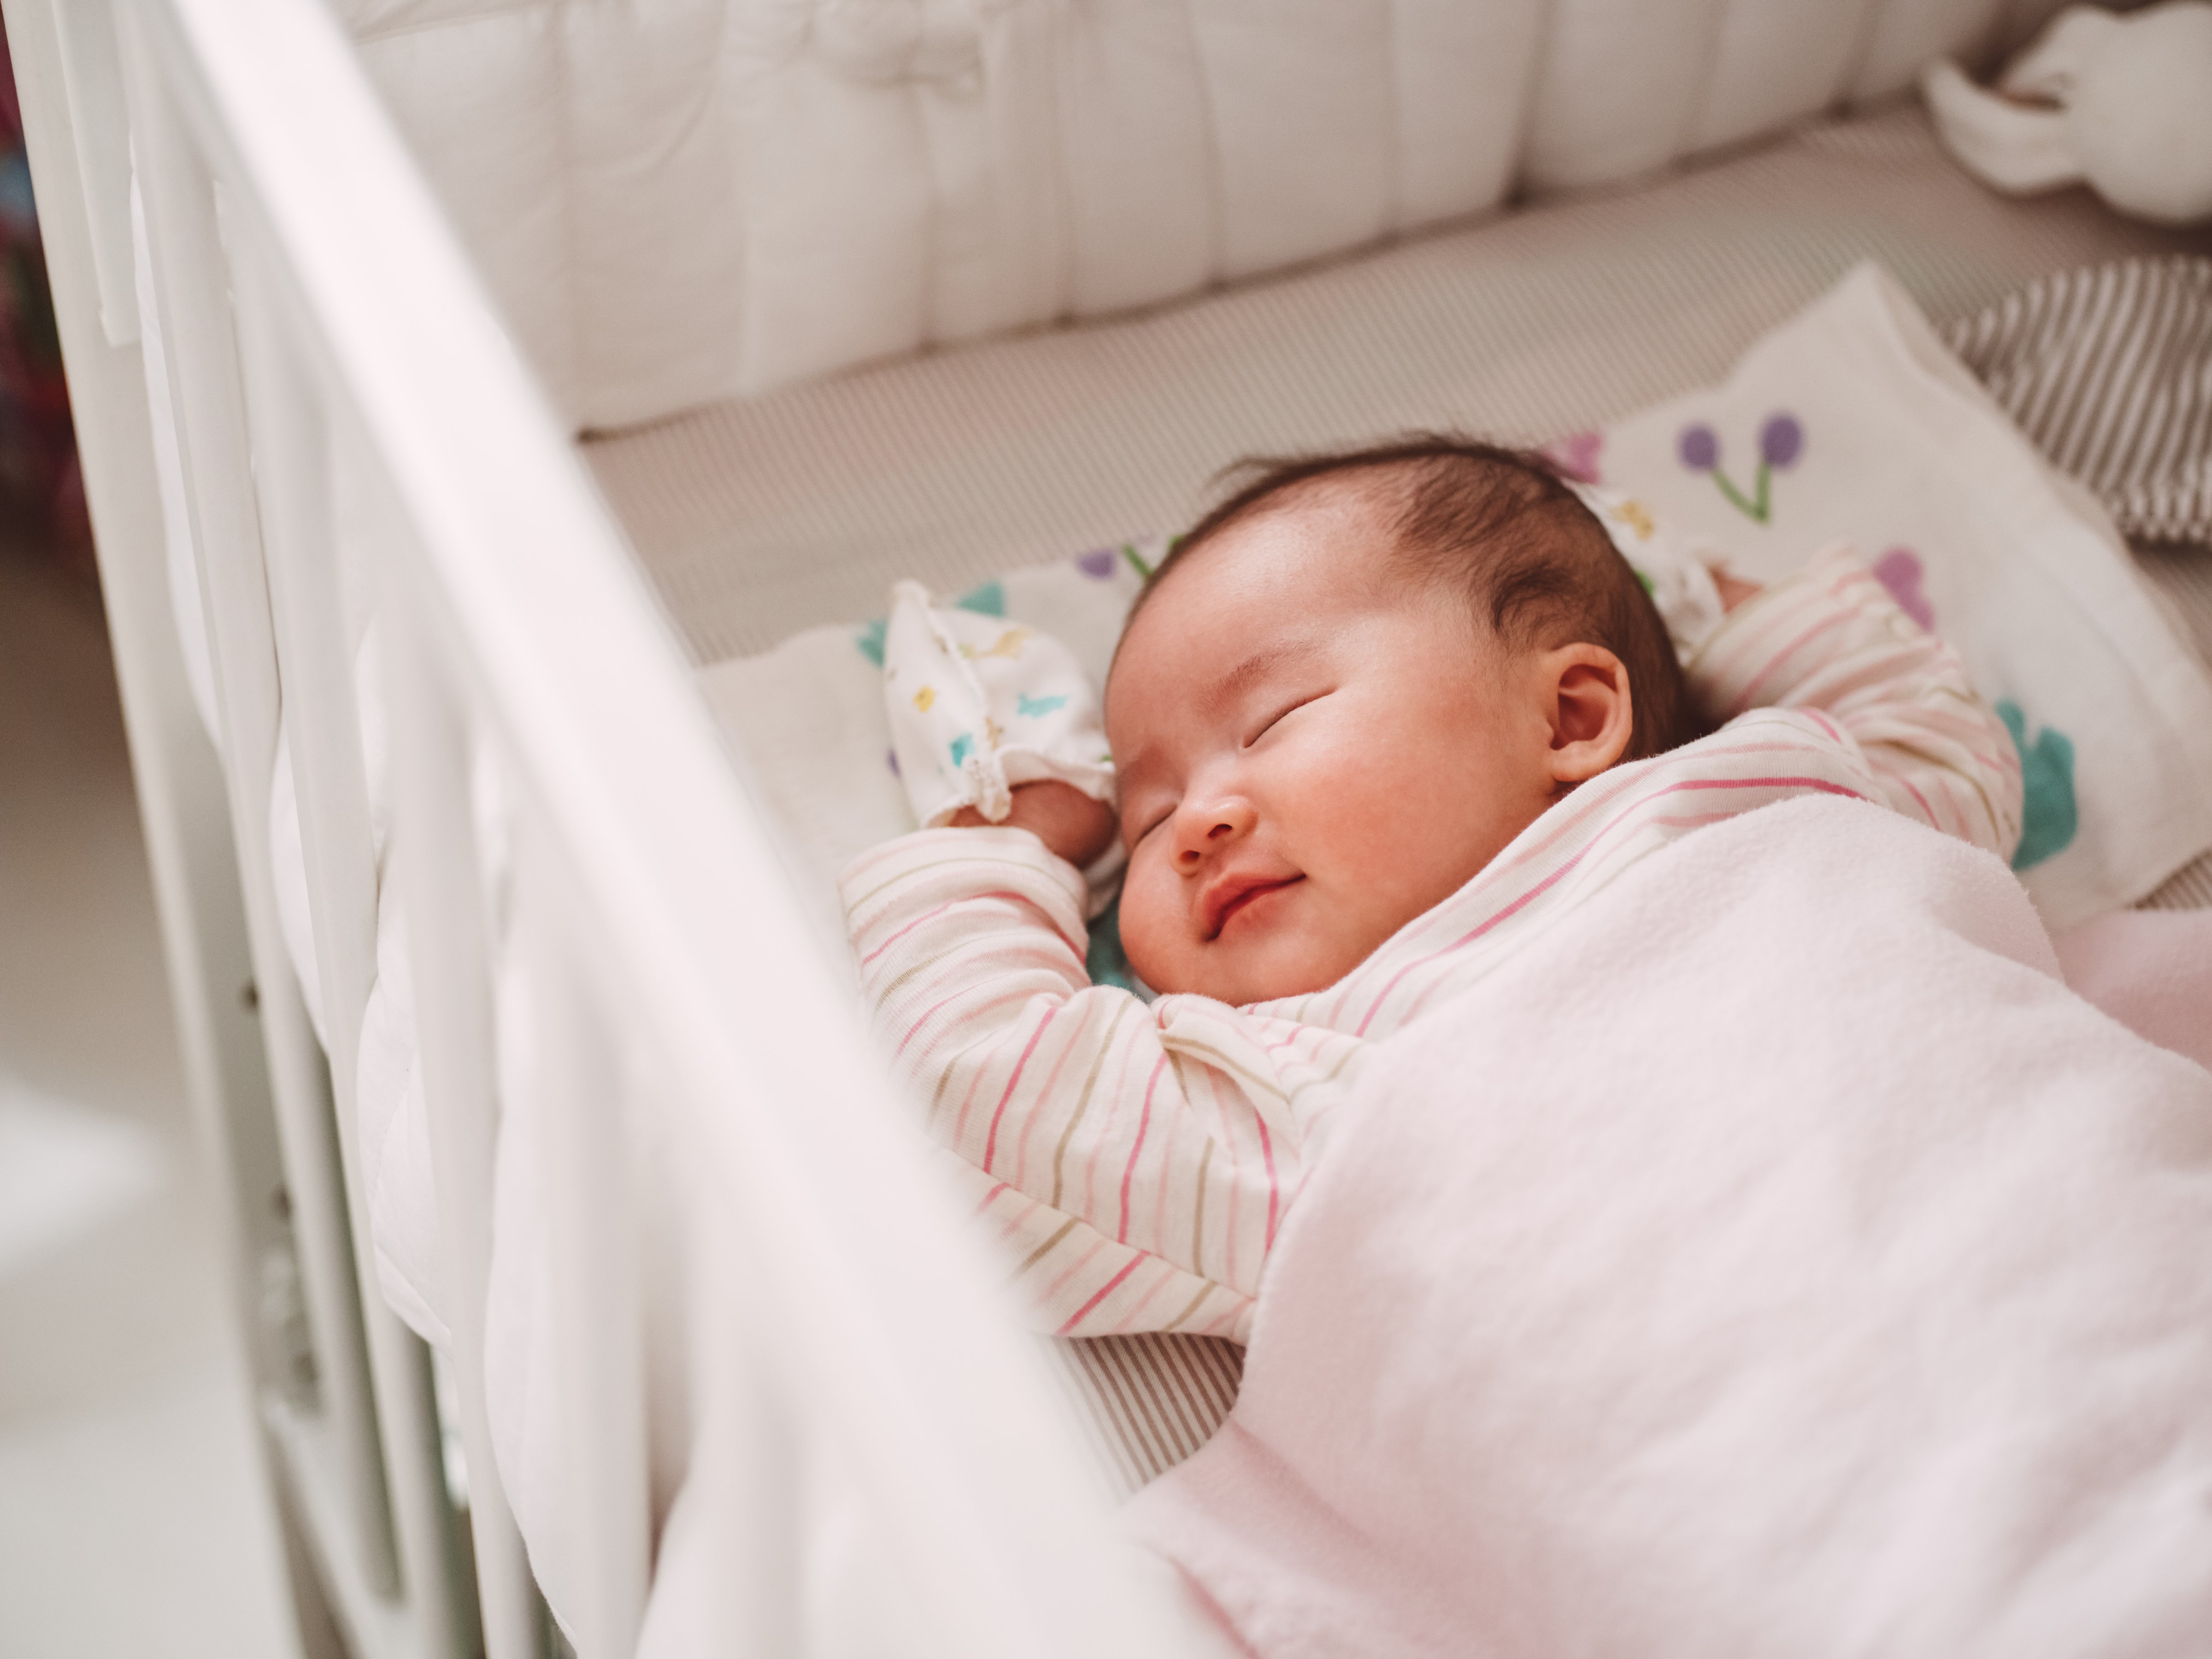 New born baby sleeping soundly in crib